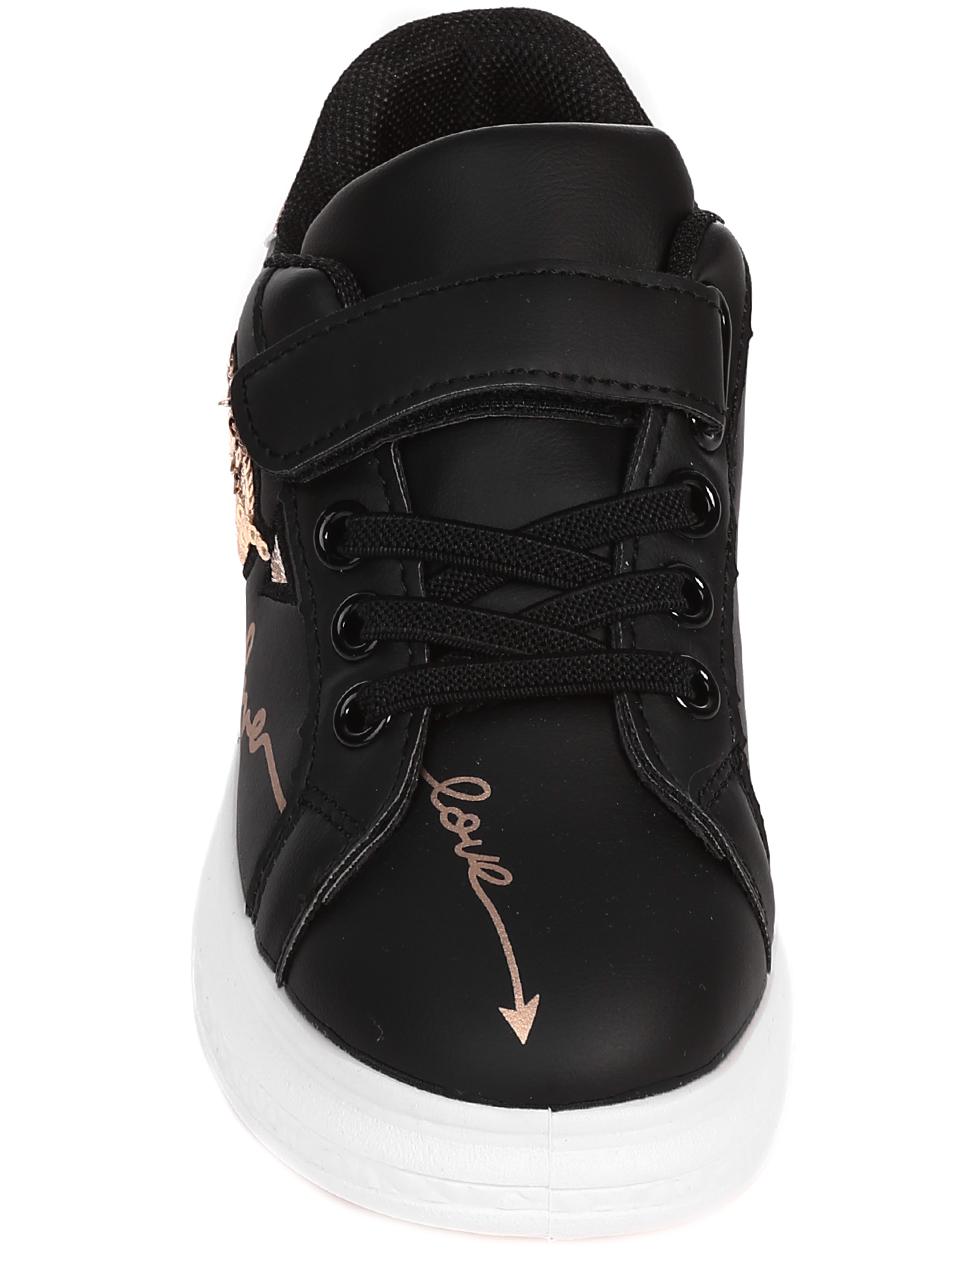 Ежедневни детски обувки в черно и златисто 18U-22036 black/gold